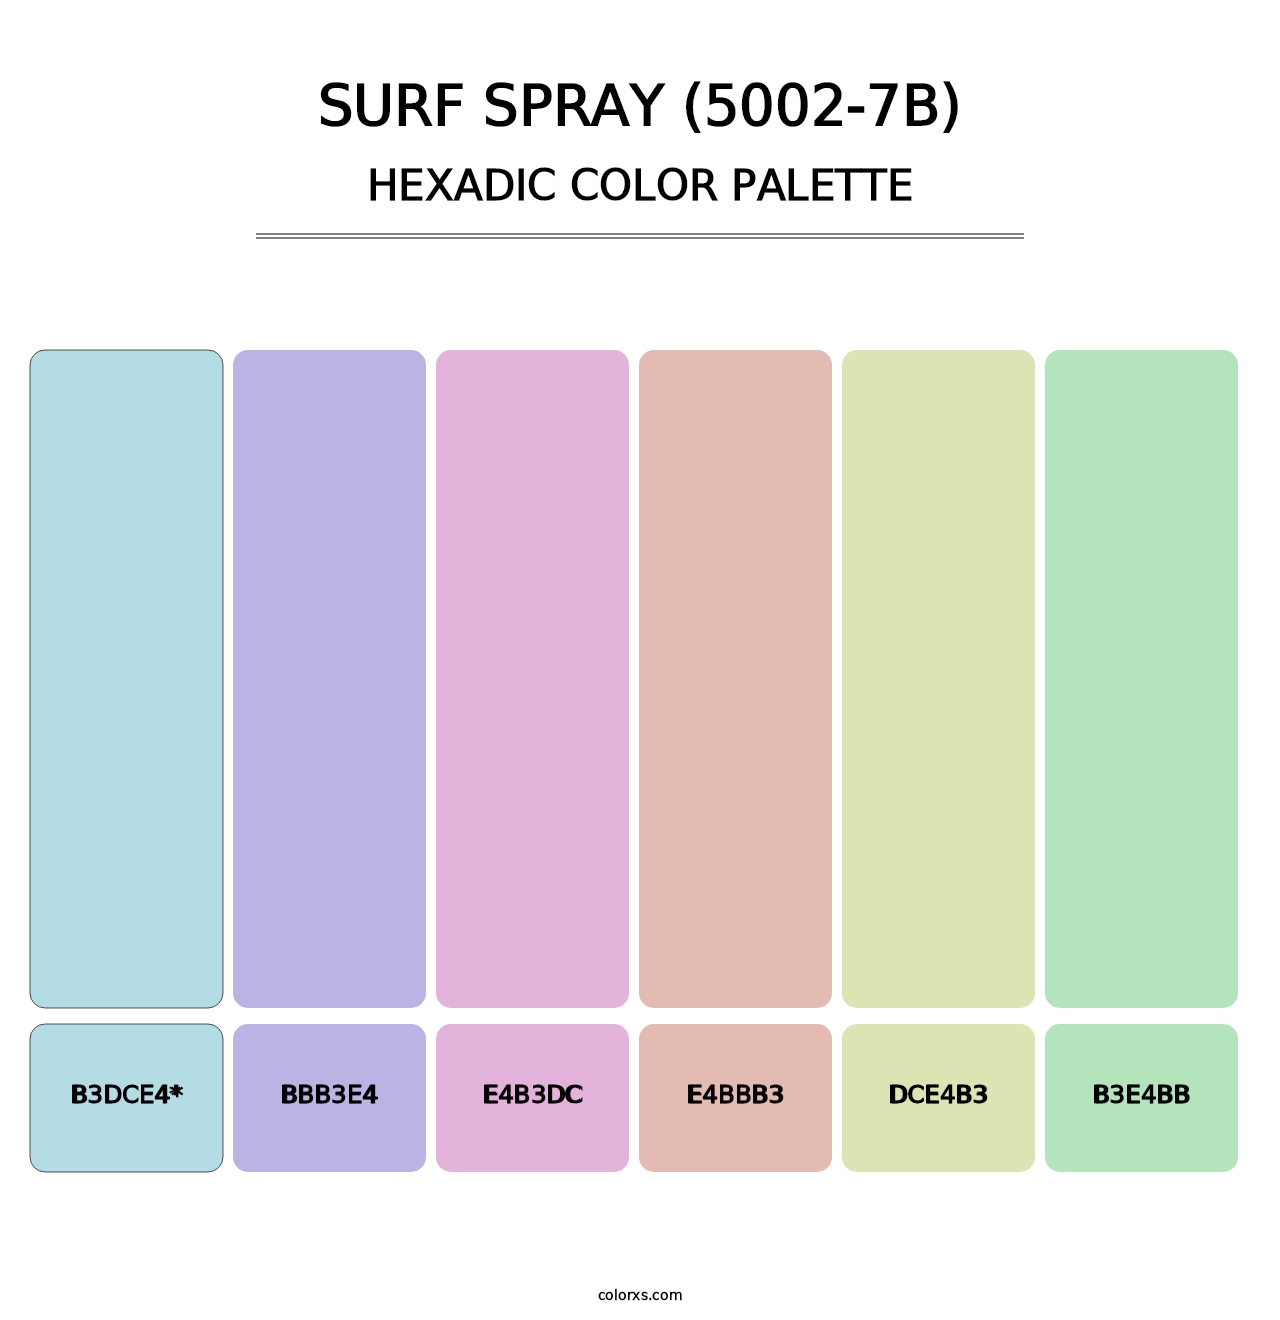 Surf Spray (5002-7B) - Hexadic Color Palette